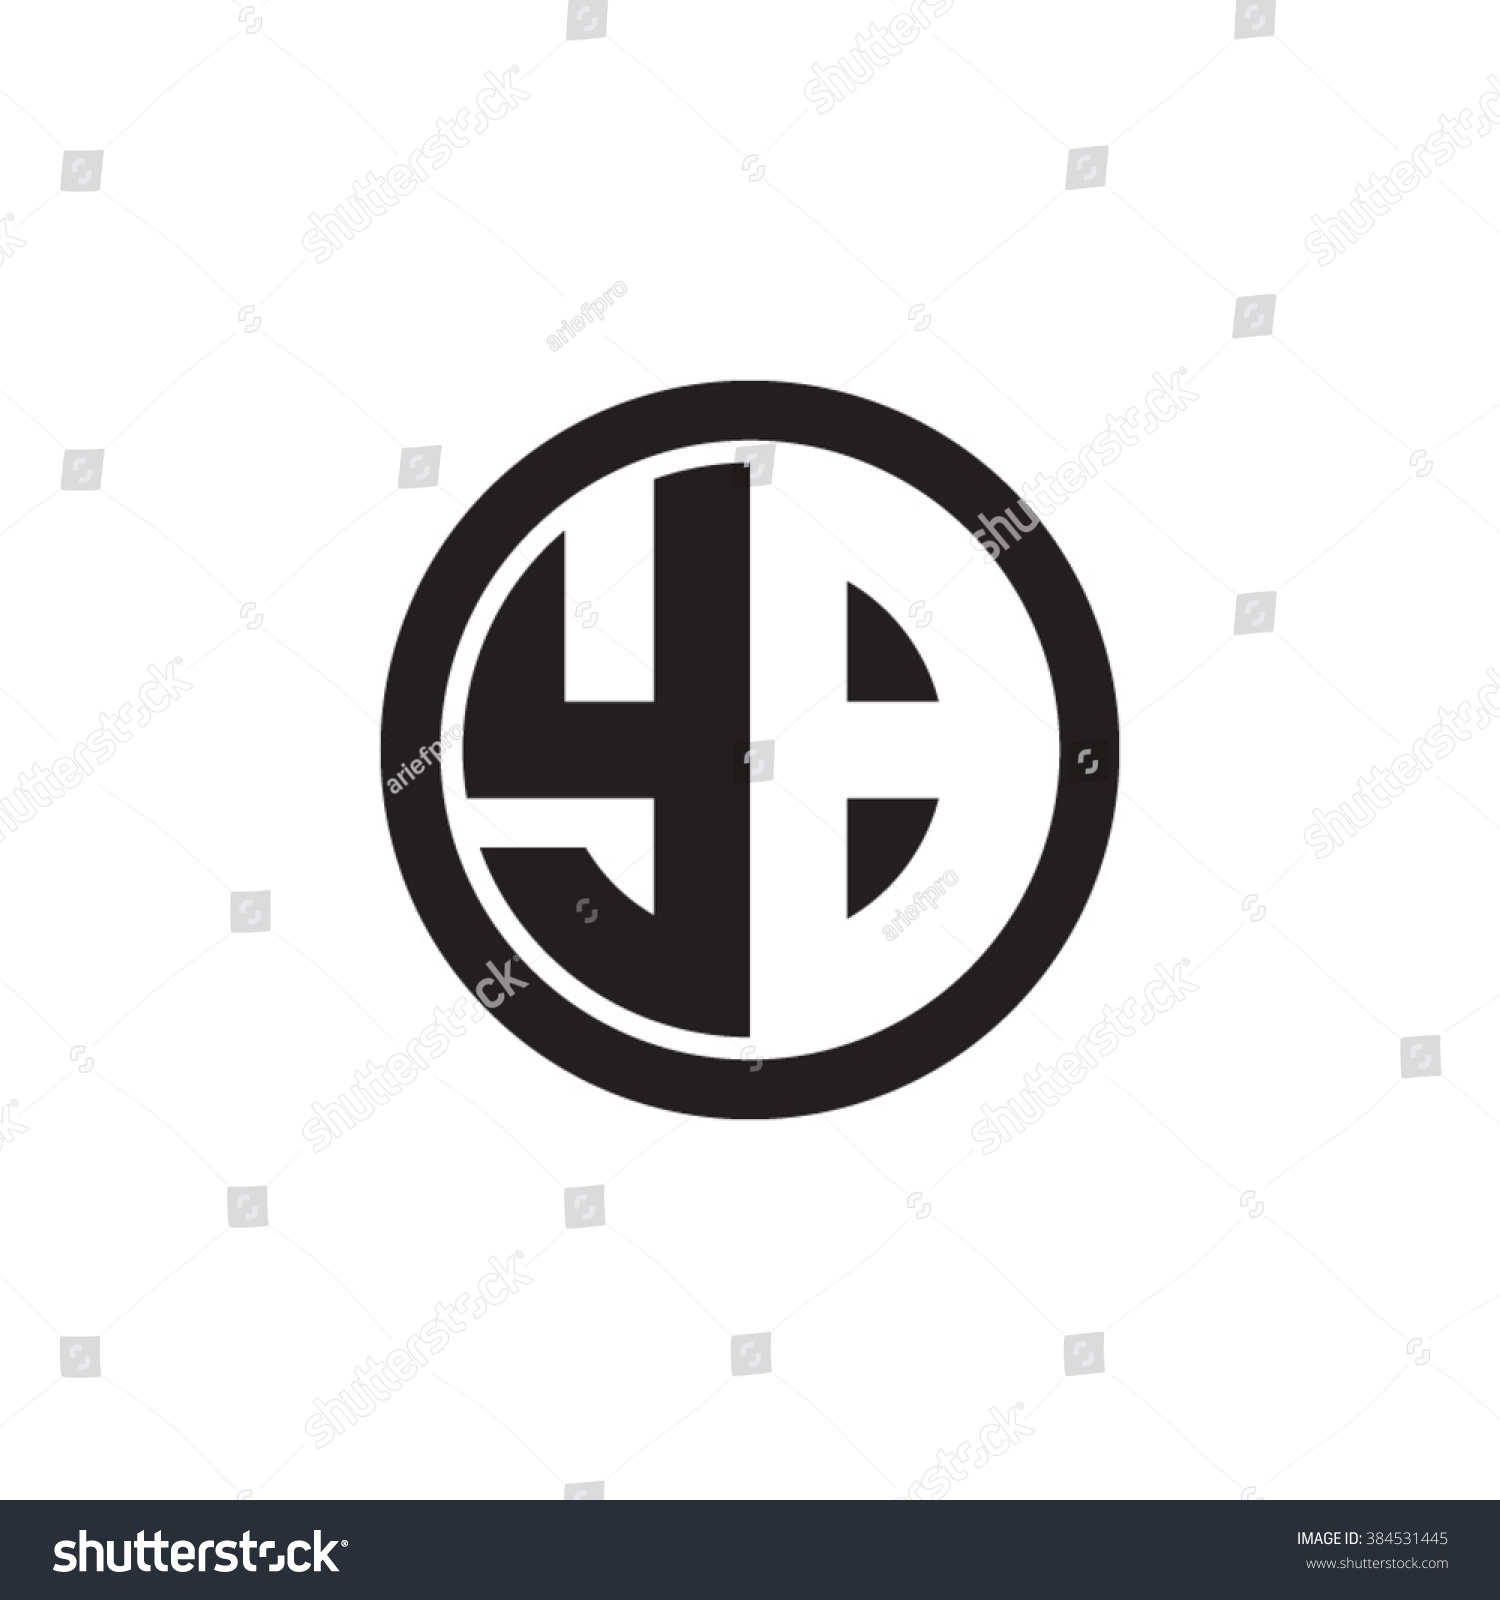 Yb Initial Letters Circle Monogram Logo Royalty Free Stock Vector 384531445 6474